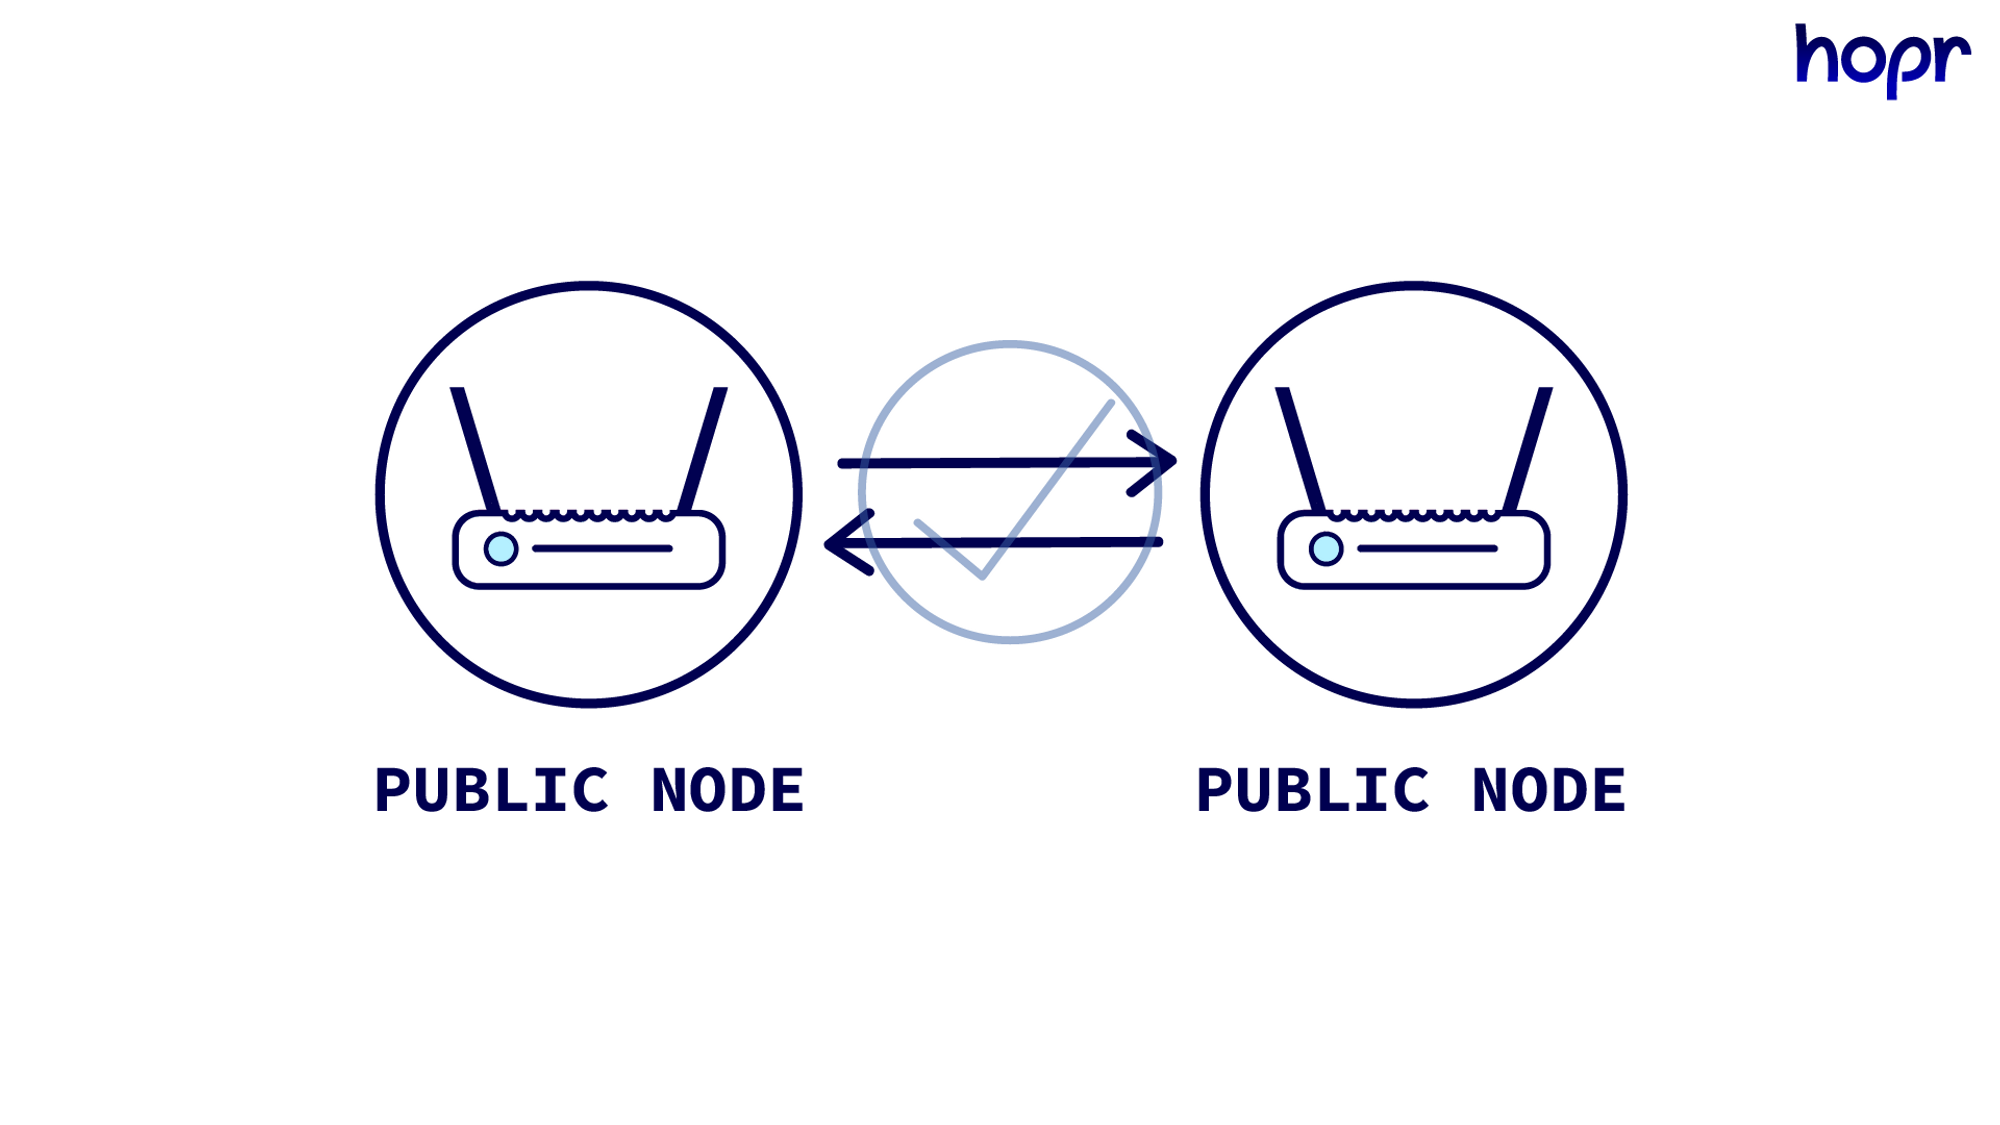 public nodes communicating